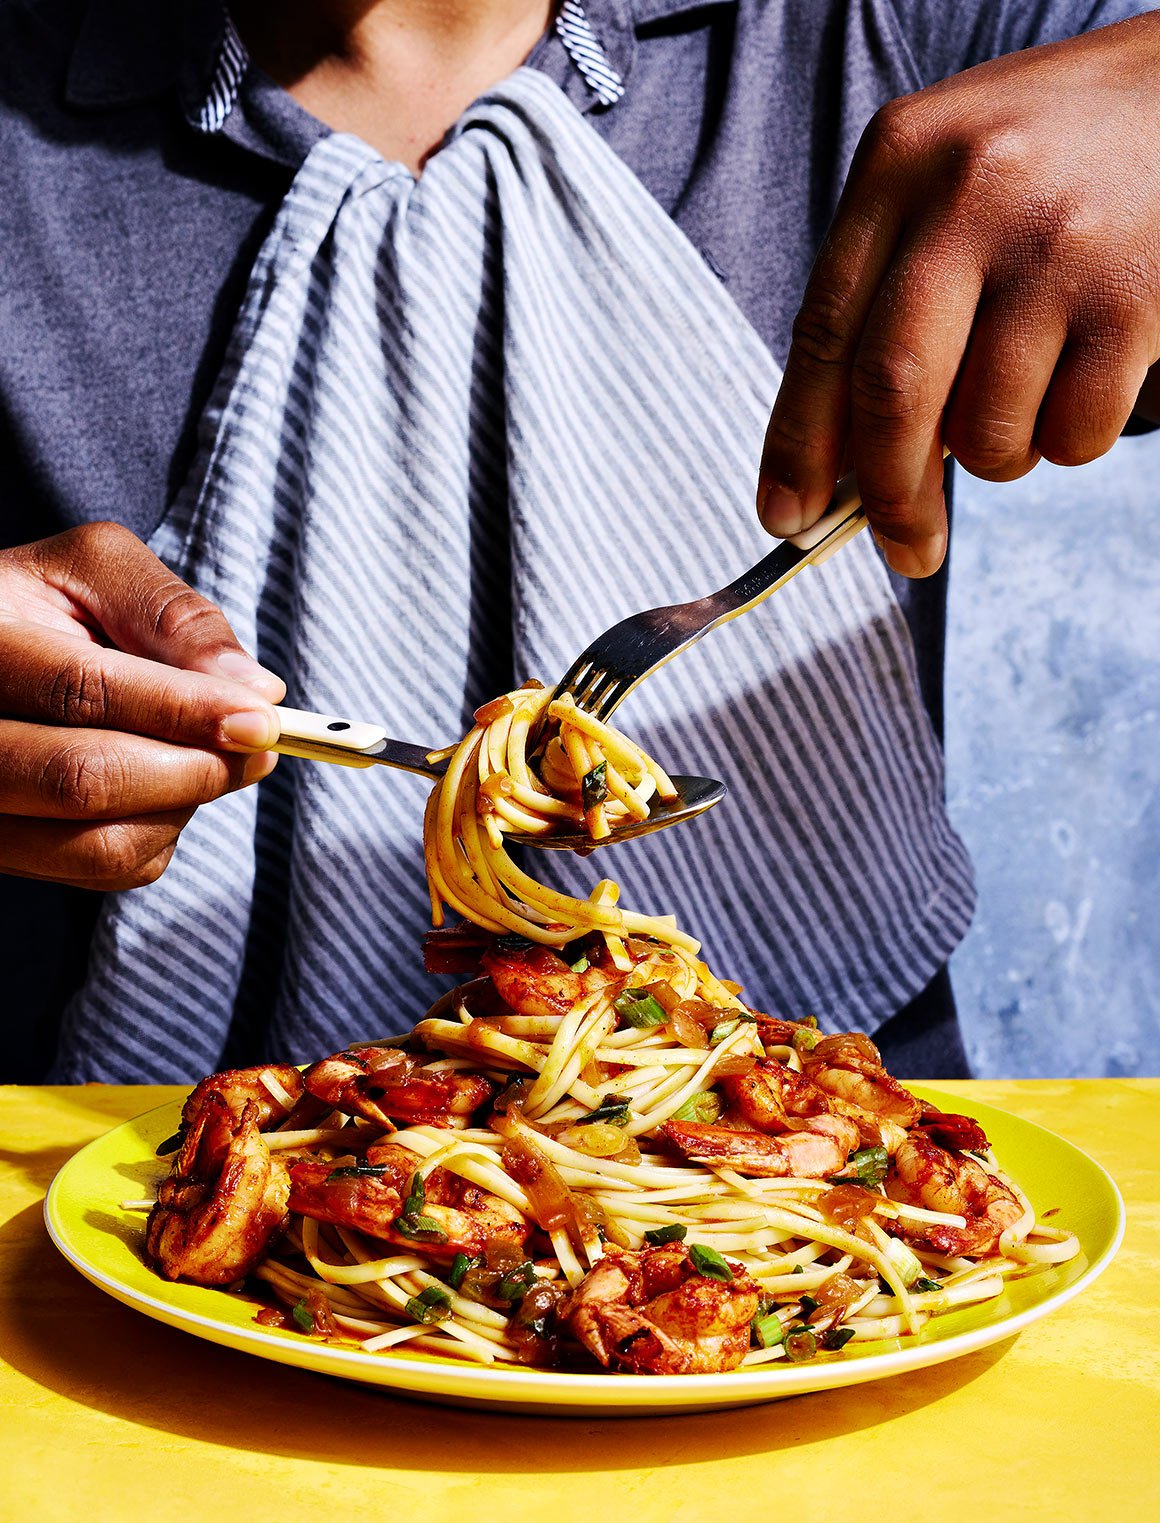 Shaquille-Oneal-eating-Shrimp-Linguine-family-style-cookbook.jpg